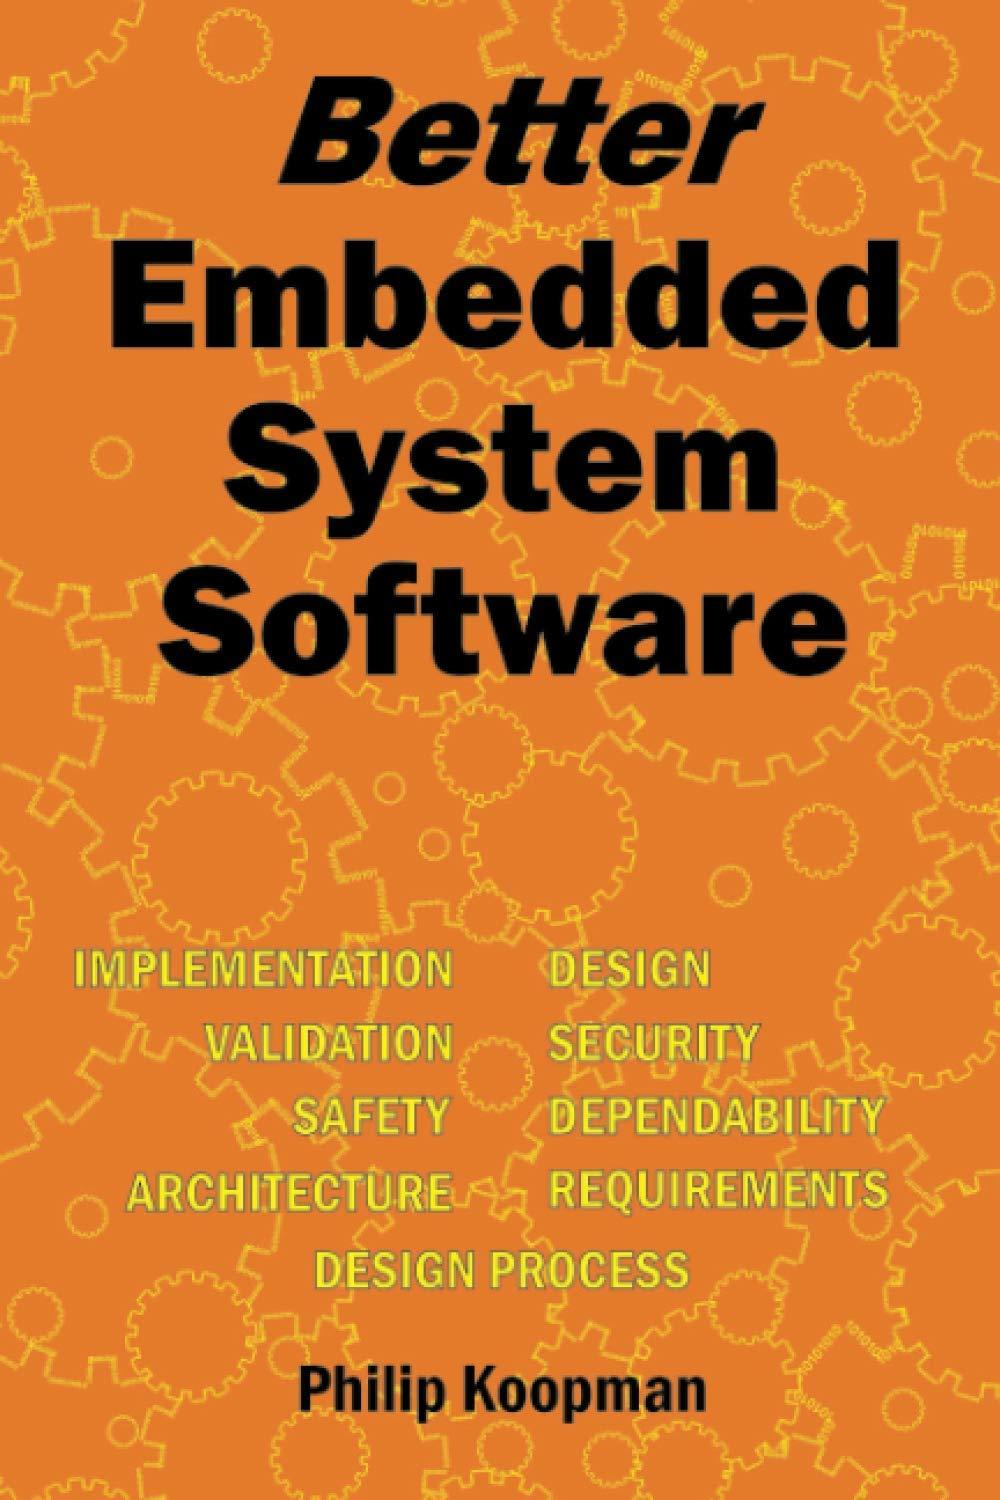 better embedded system software 1st edition philip koopman b08tz9lyxc, 979-8596008050